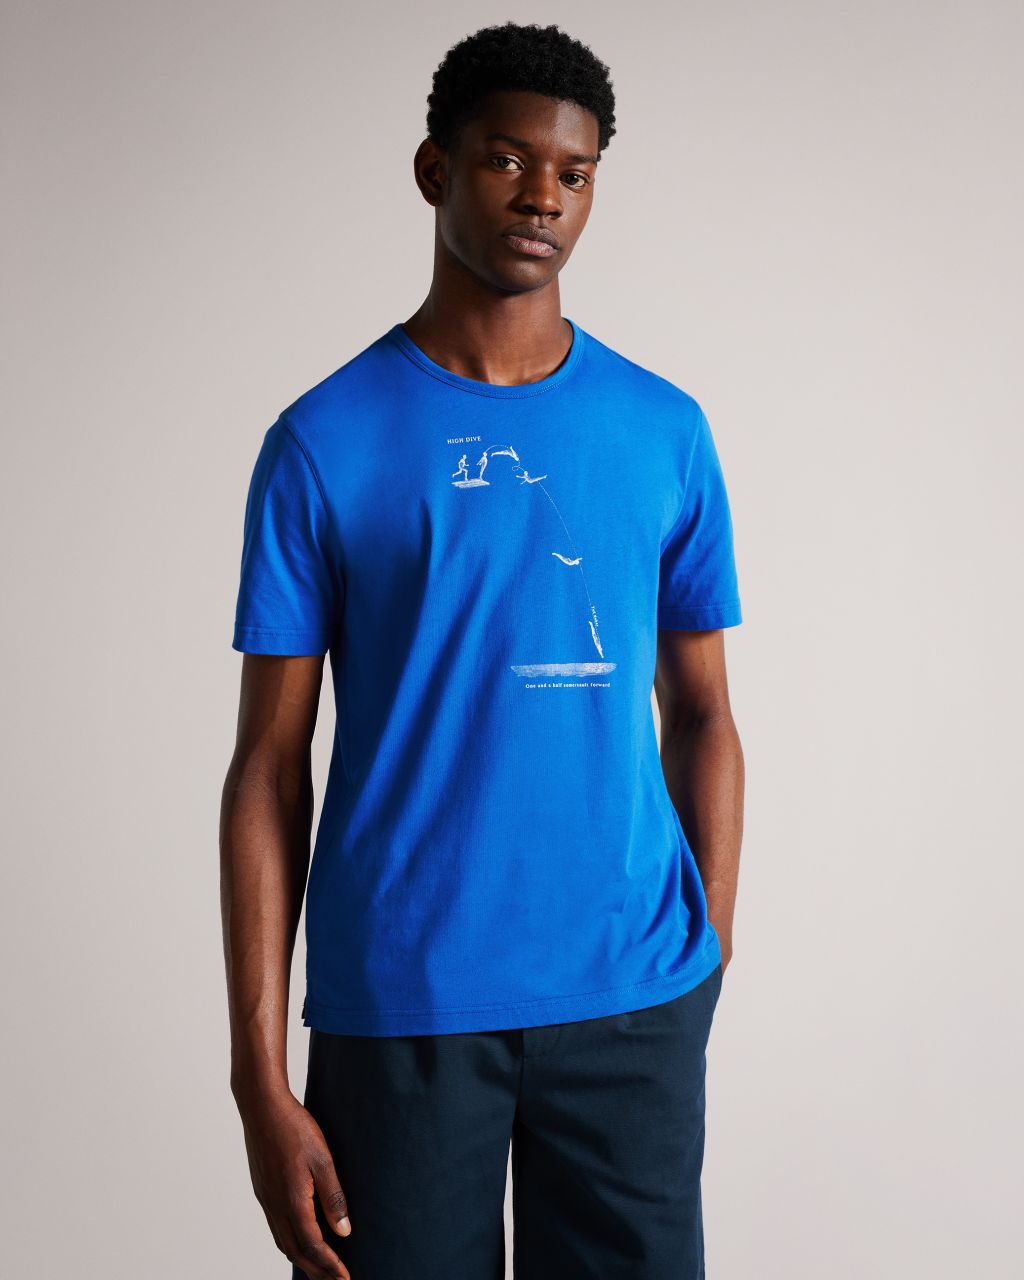 Ted Baker Men's Short Sleeve Graphic Regular T-Shirt in Medium Blue, Celebes, Cotton